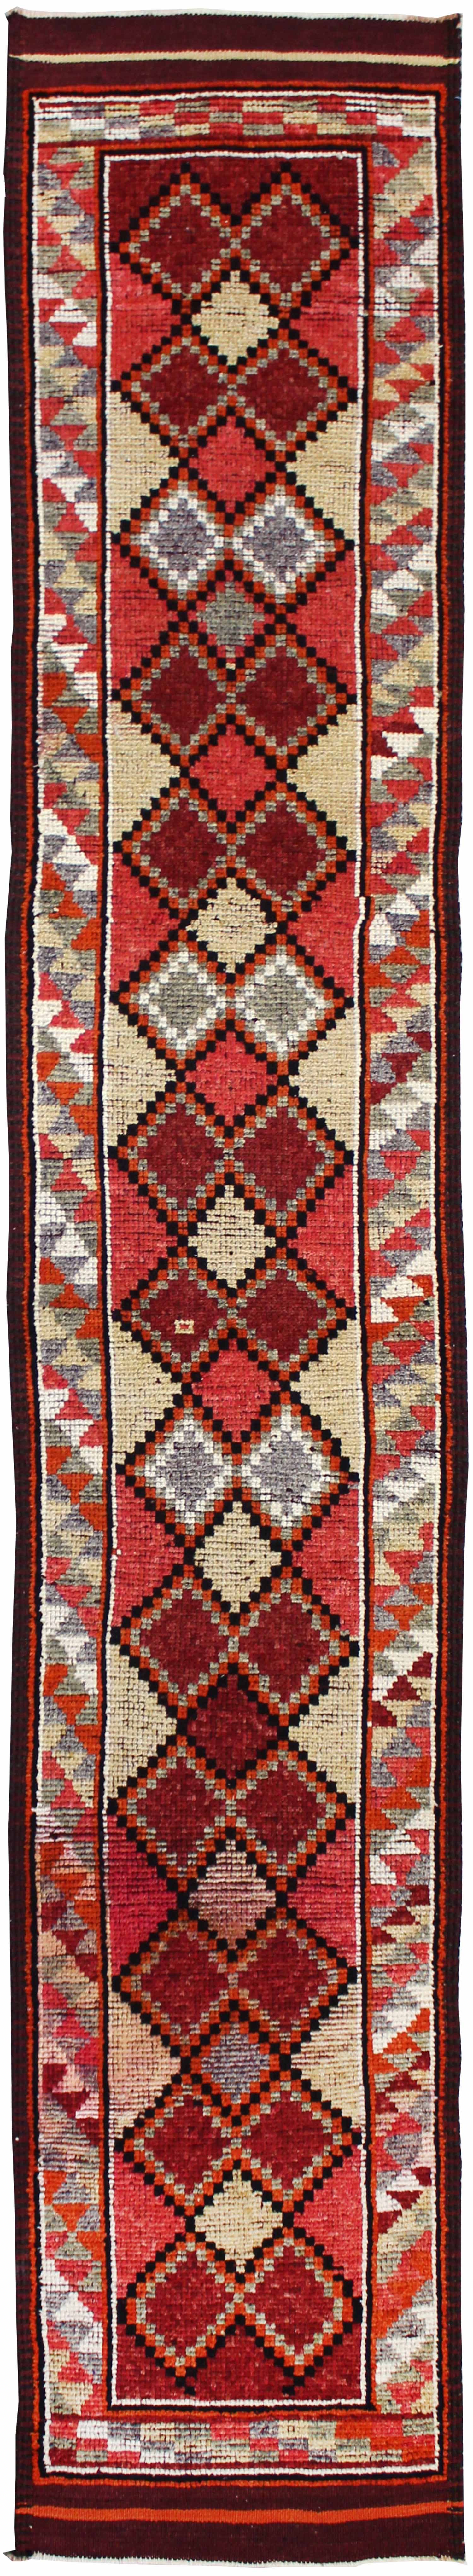 Vintage Herki Handwoven Tribal Rug